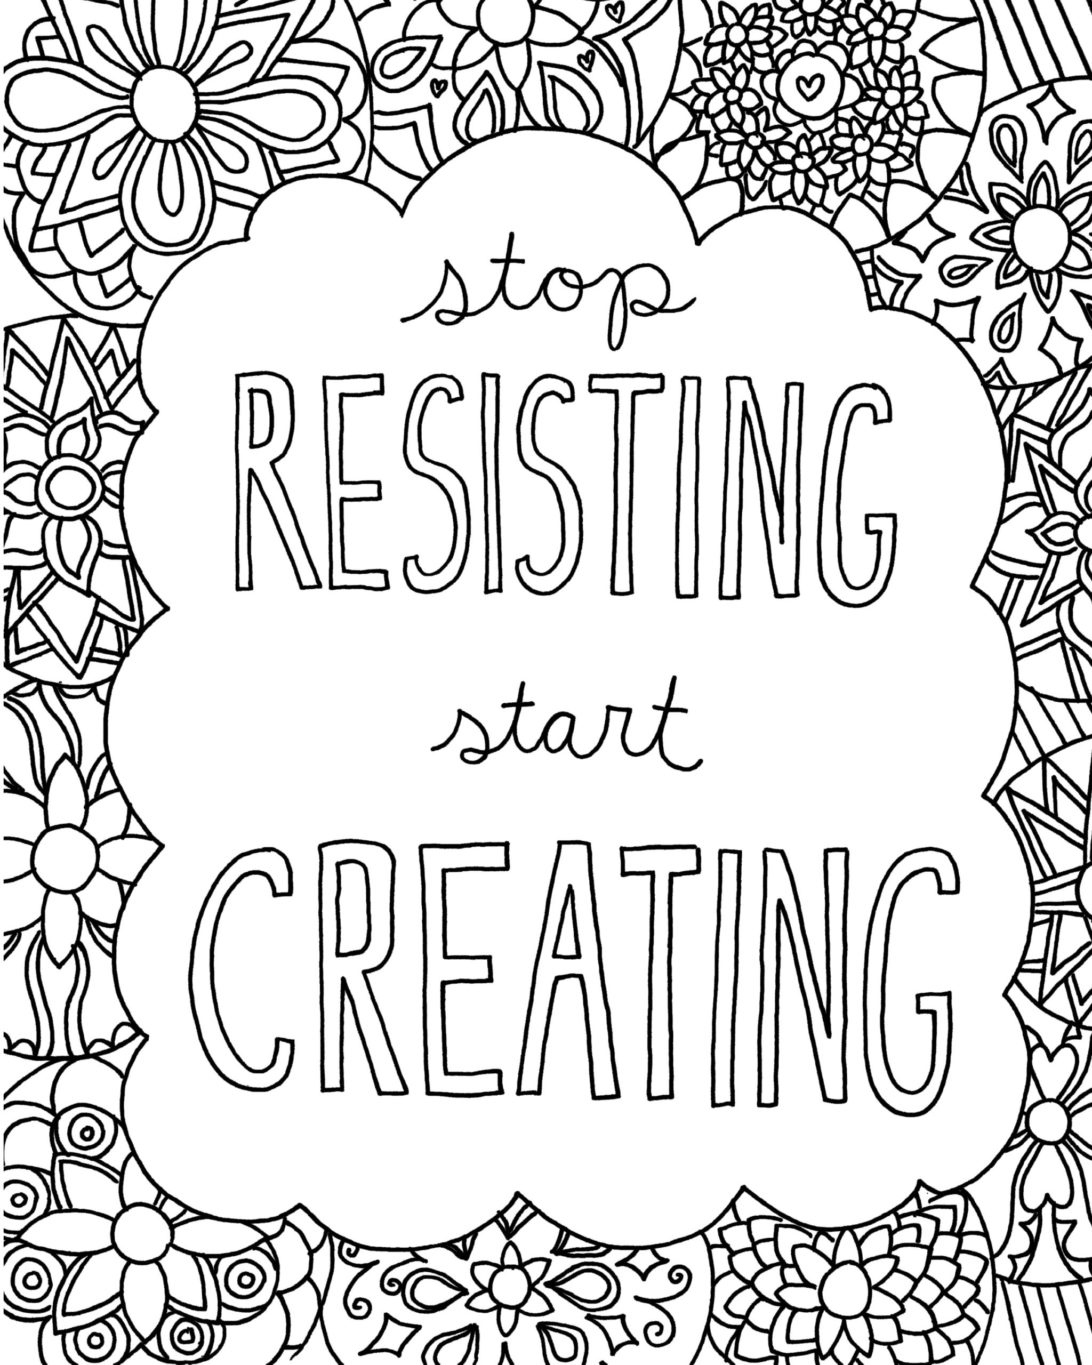 Stop Resisting Start Creating Coloring Page - Free Printable Coloring